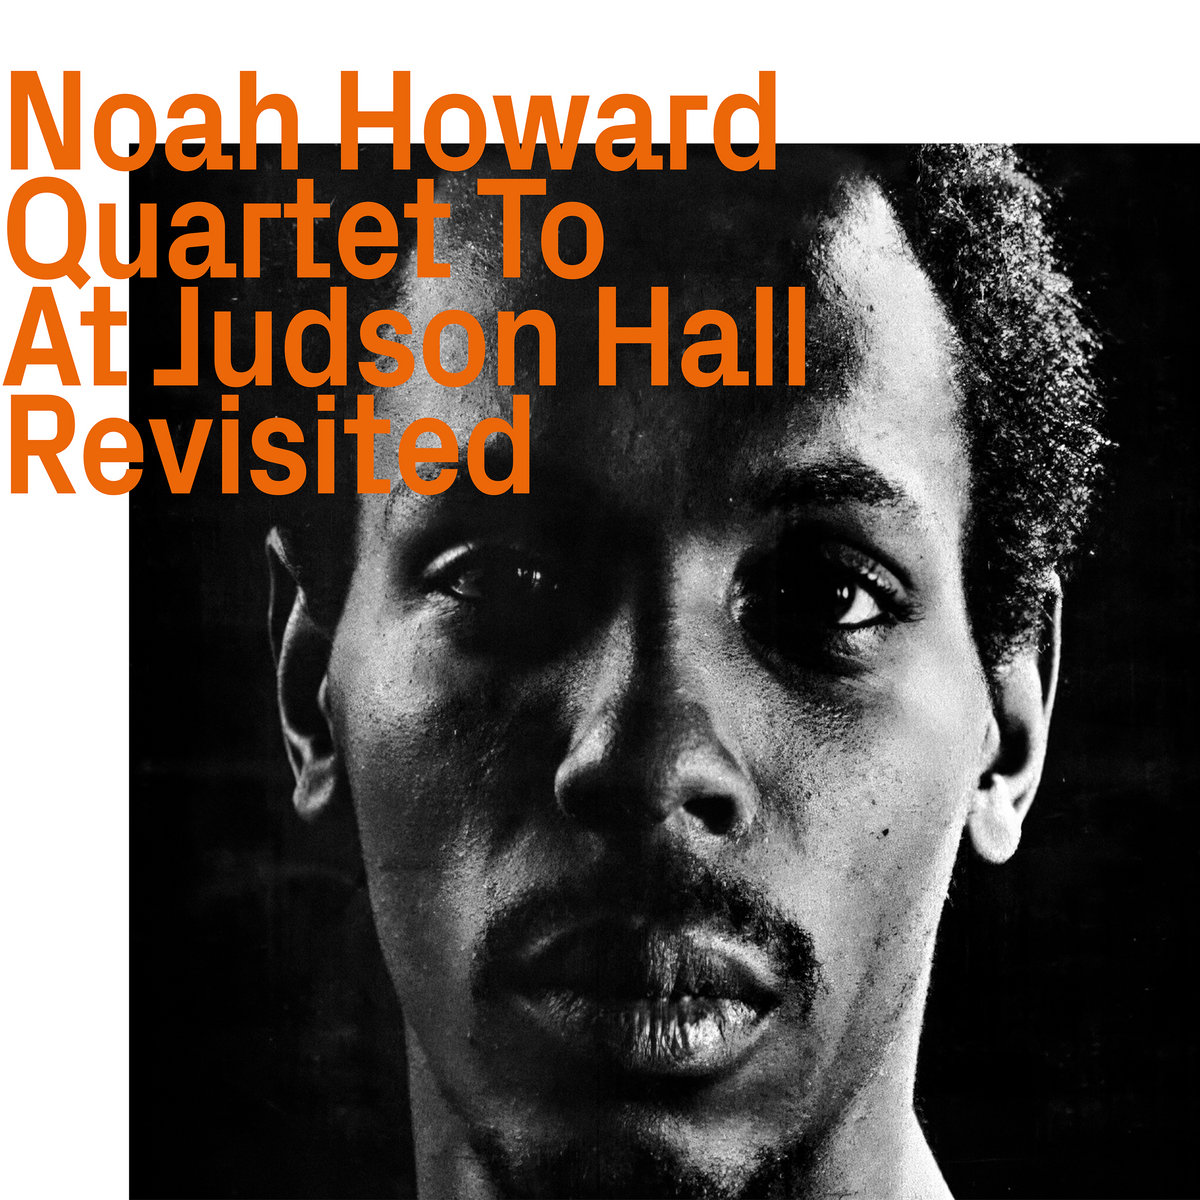 Noah Howard, Quartet To At Judson Hall Revisited